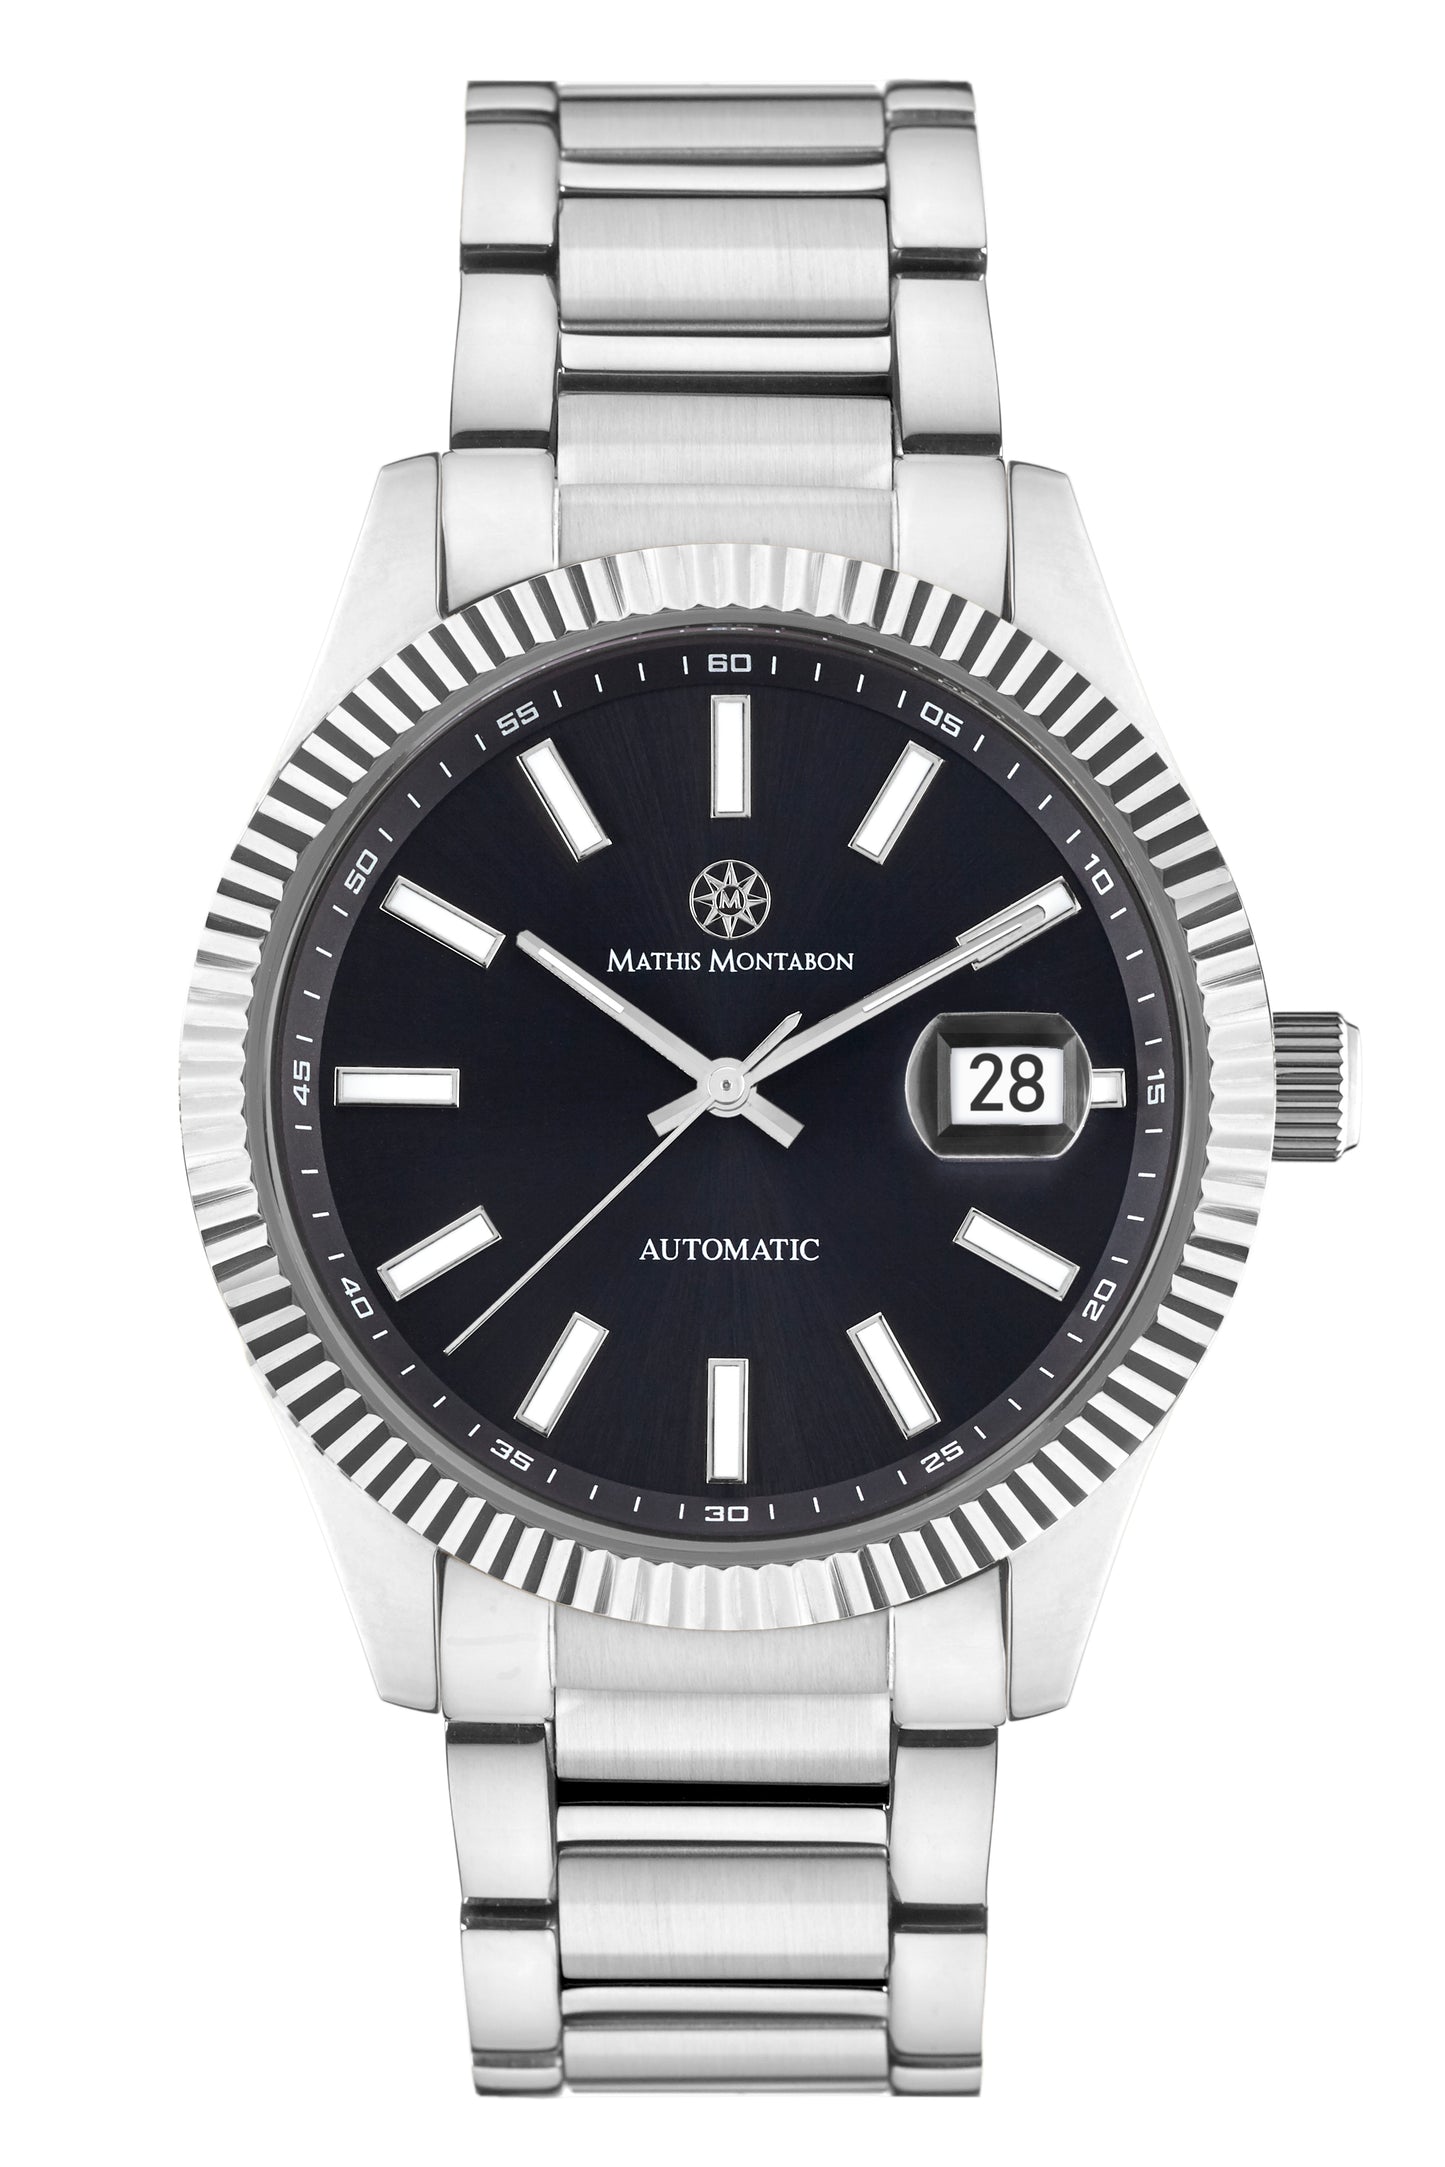 Automatic watches — Héritage — Mathis Montabon — black